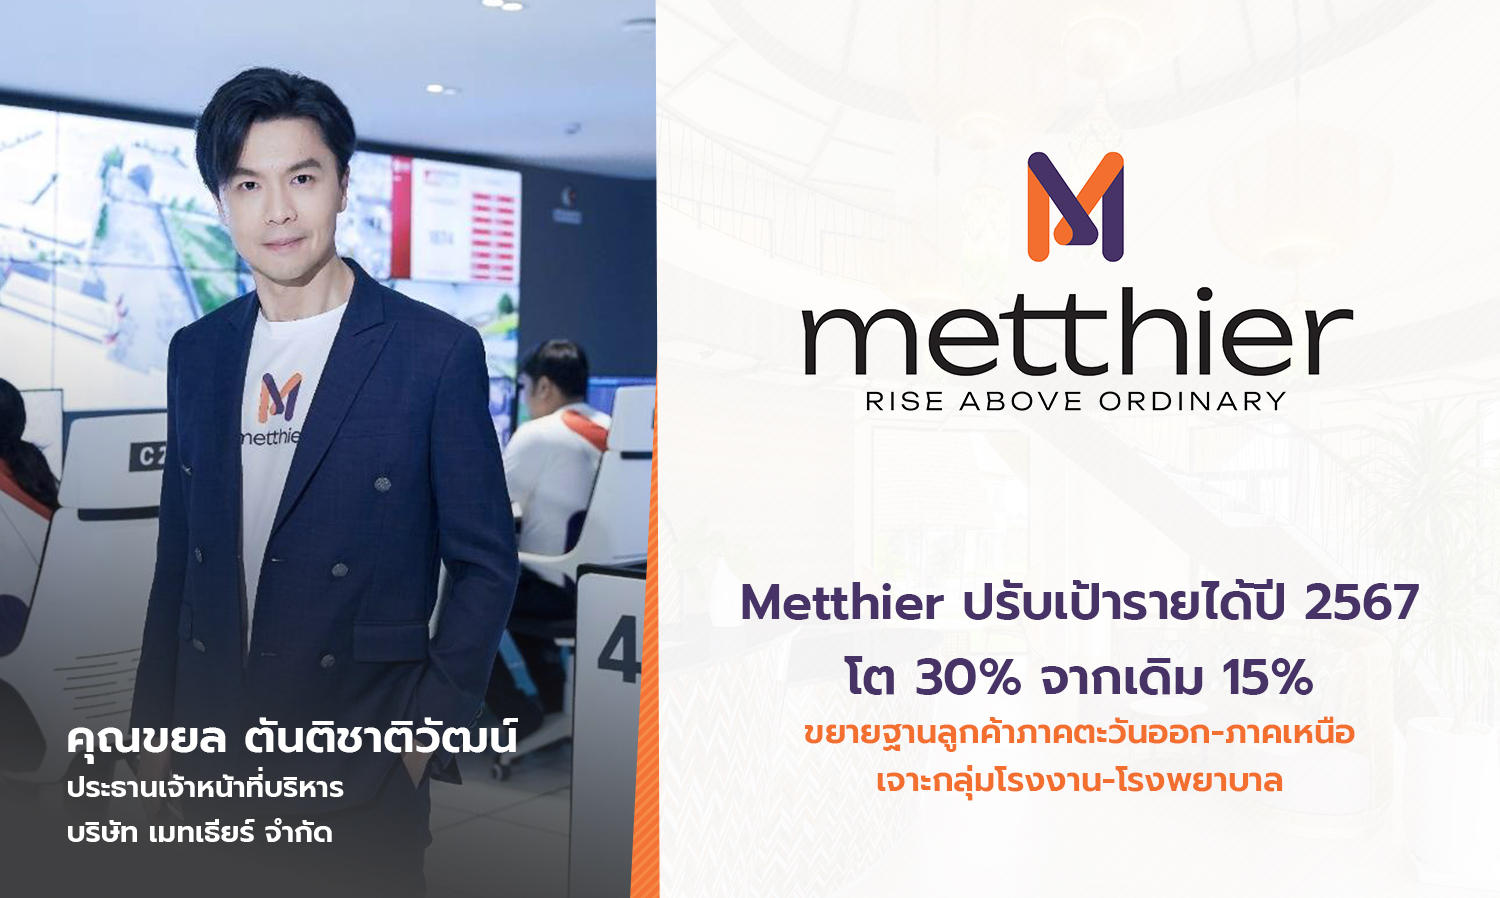 Metthier ปรับเป้ารายได้ปี 2567 โต 30% จากเดิม 15% ขยายฐานลูกค้าภาคตะวันออก-ภาคเหนือ เจาะกลุ่มโรงงาน-โรงพยาบาล